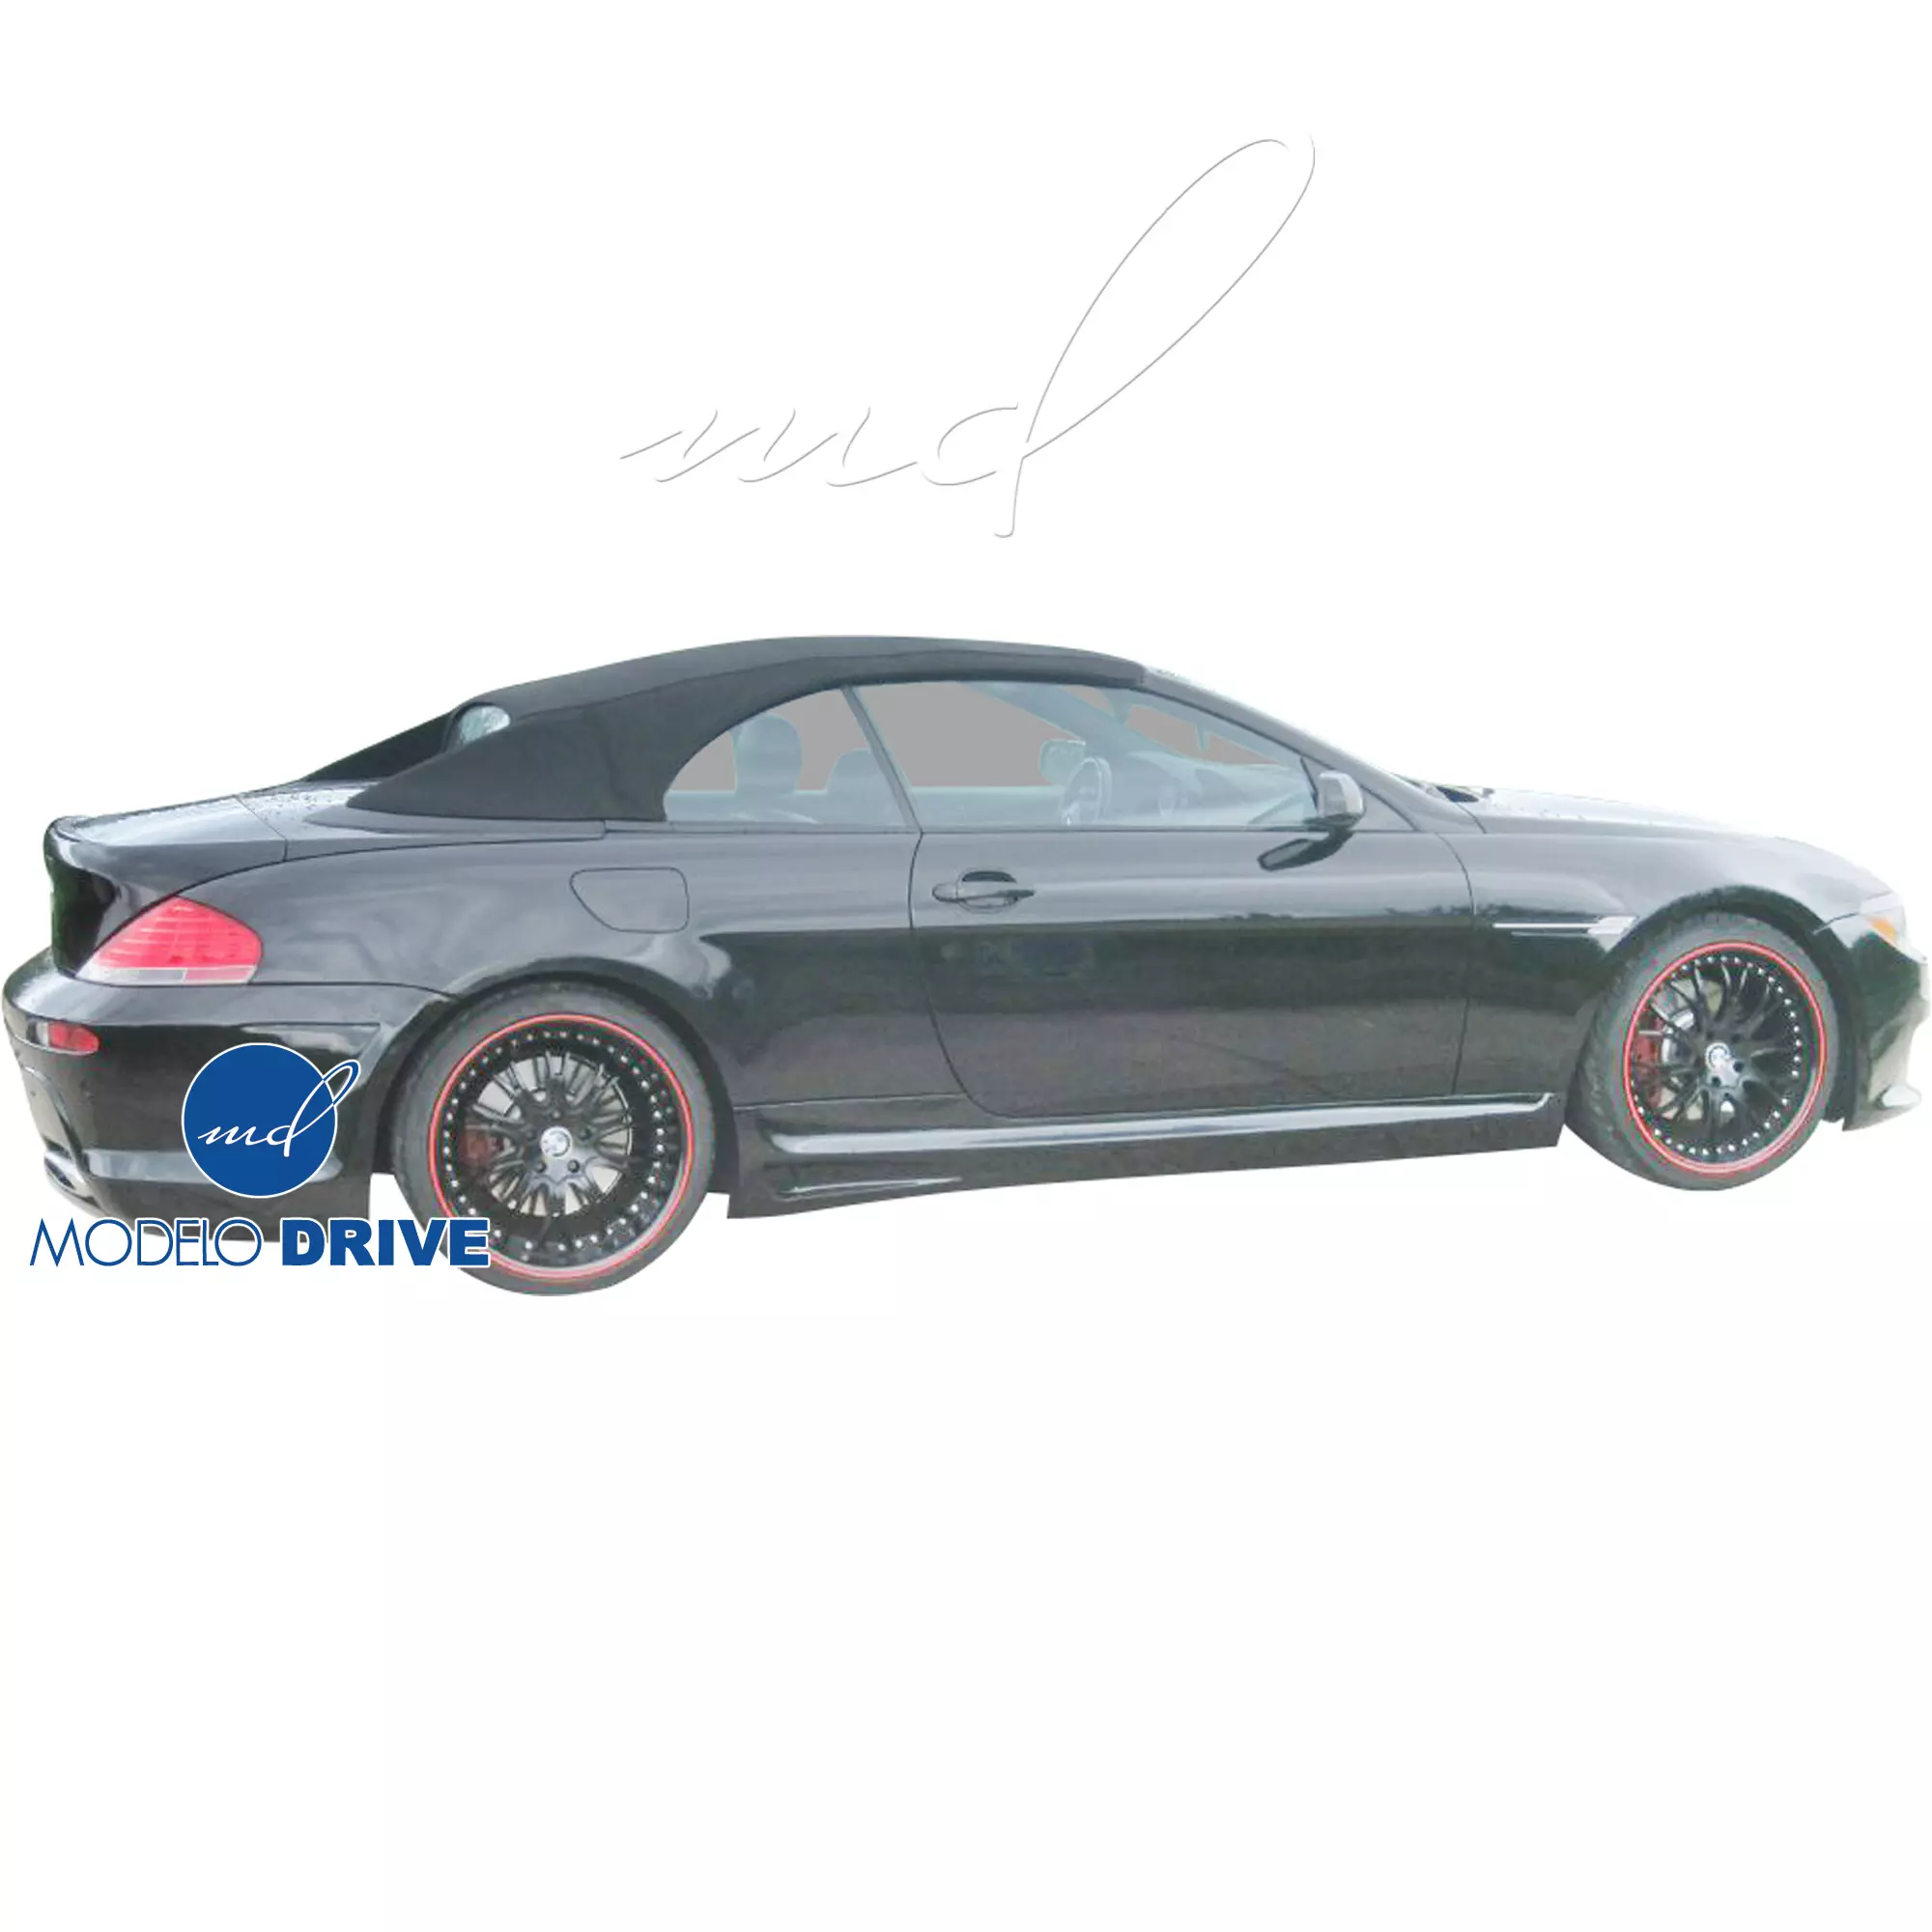 ModeloDrive FRP LDES Body Kit 4pc > BMW 6-Series E63 E64 2004-2010 > 2dr - Image 33